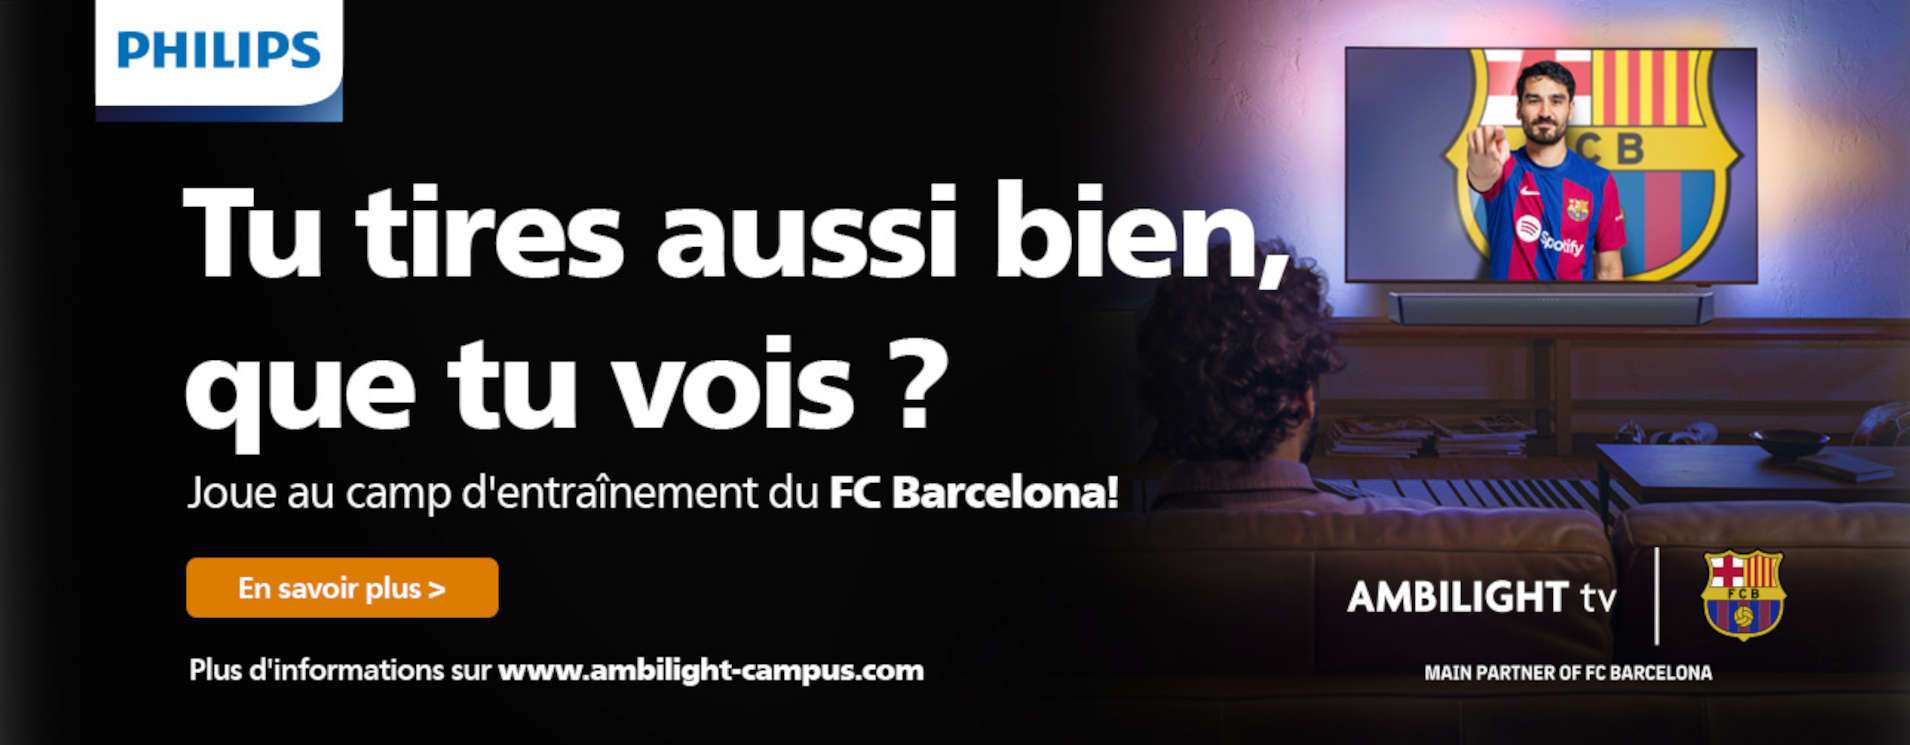 Philips x FC Barcelona